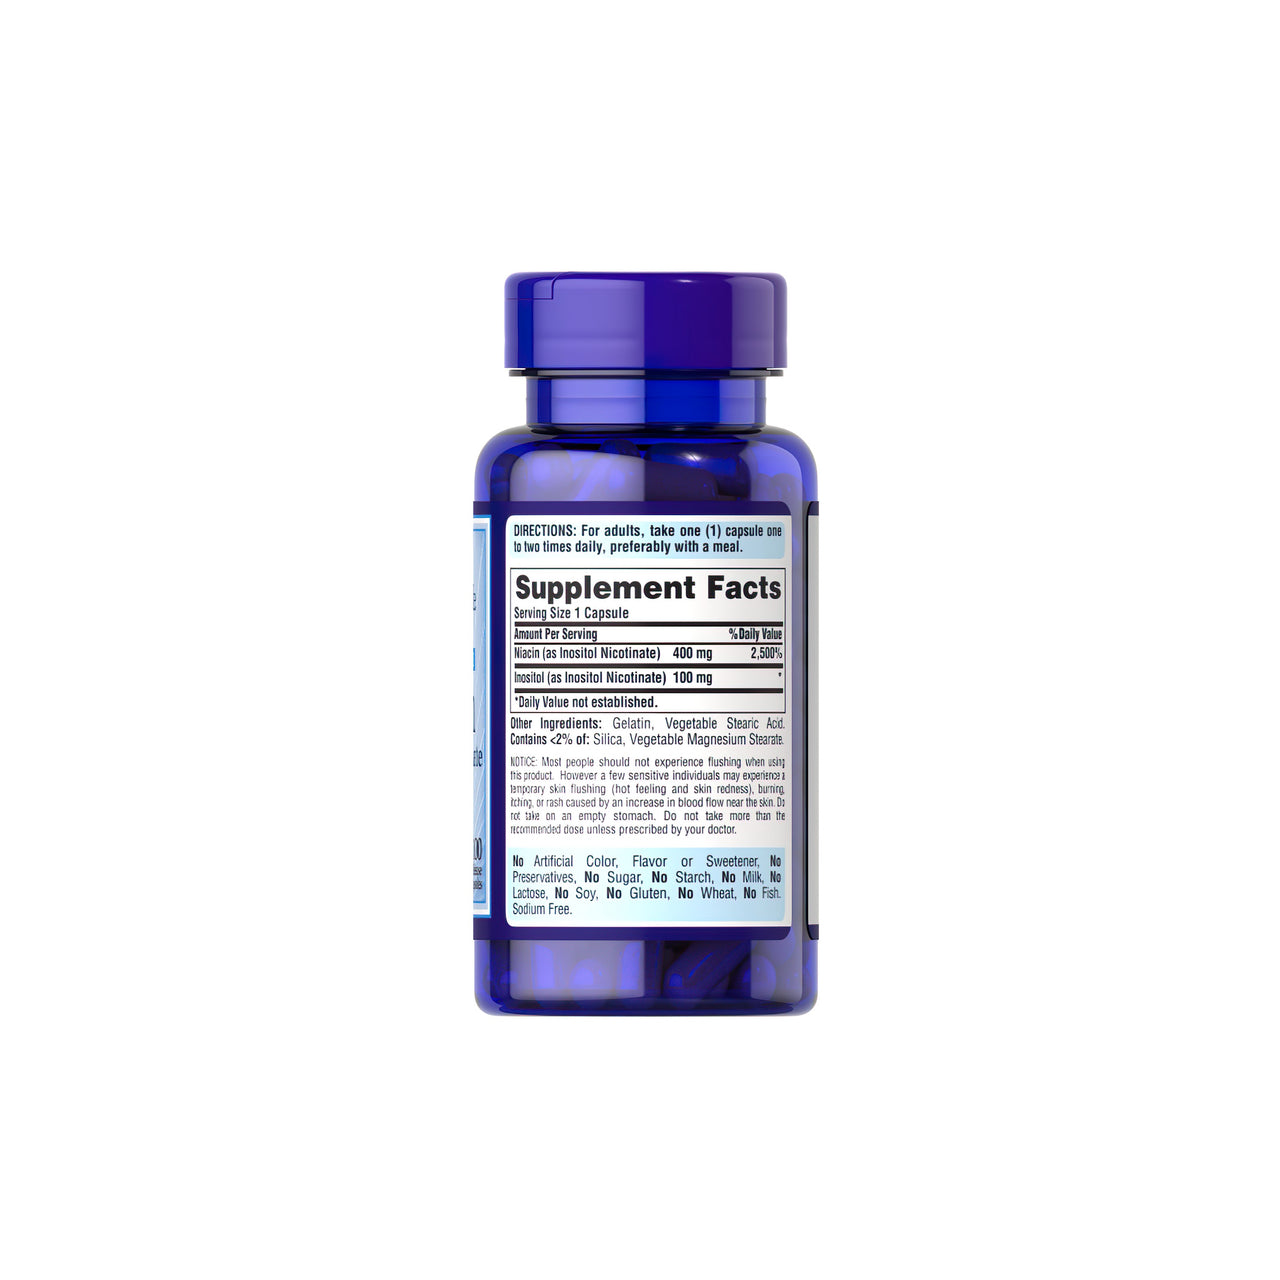 A bottle of Puritan's Pride Vitamin B-3 Niacin Flush Free 500 mg 100 Rapid Release Capsules cardiovascular wellness supplement.